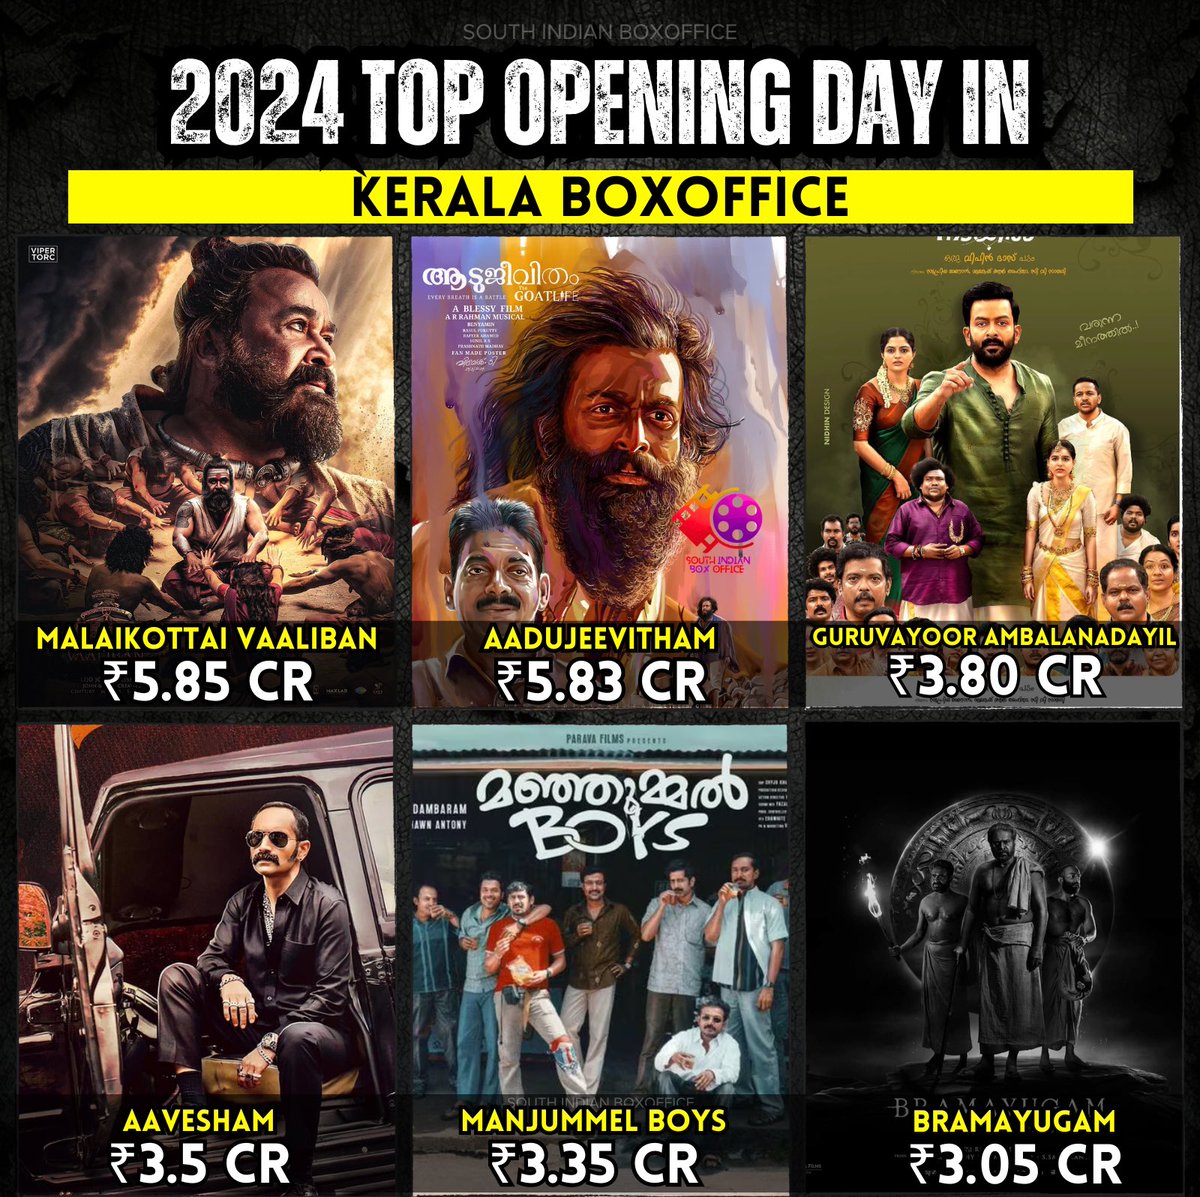 2024 Top Opening Day in Kerala Boxoffice

1 #MalaikottaiVaaliban : ₹5.85 CR
2 #Aadujeevitham : ₹5.83 CR
3 #GuruvayoorAmbalaNadayil : ₹3.80 CR
4 #Aavesham : ₹3.5 CR
5 #ManjummelBoys : ₹3.35 CR
6 #Bramayugam : ₹3.05 CR
7 #VarshangalkkuShesham : ₹3 CR
8 #AbrahamOzler : ₹2.90